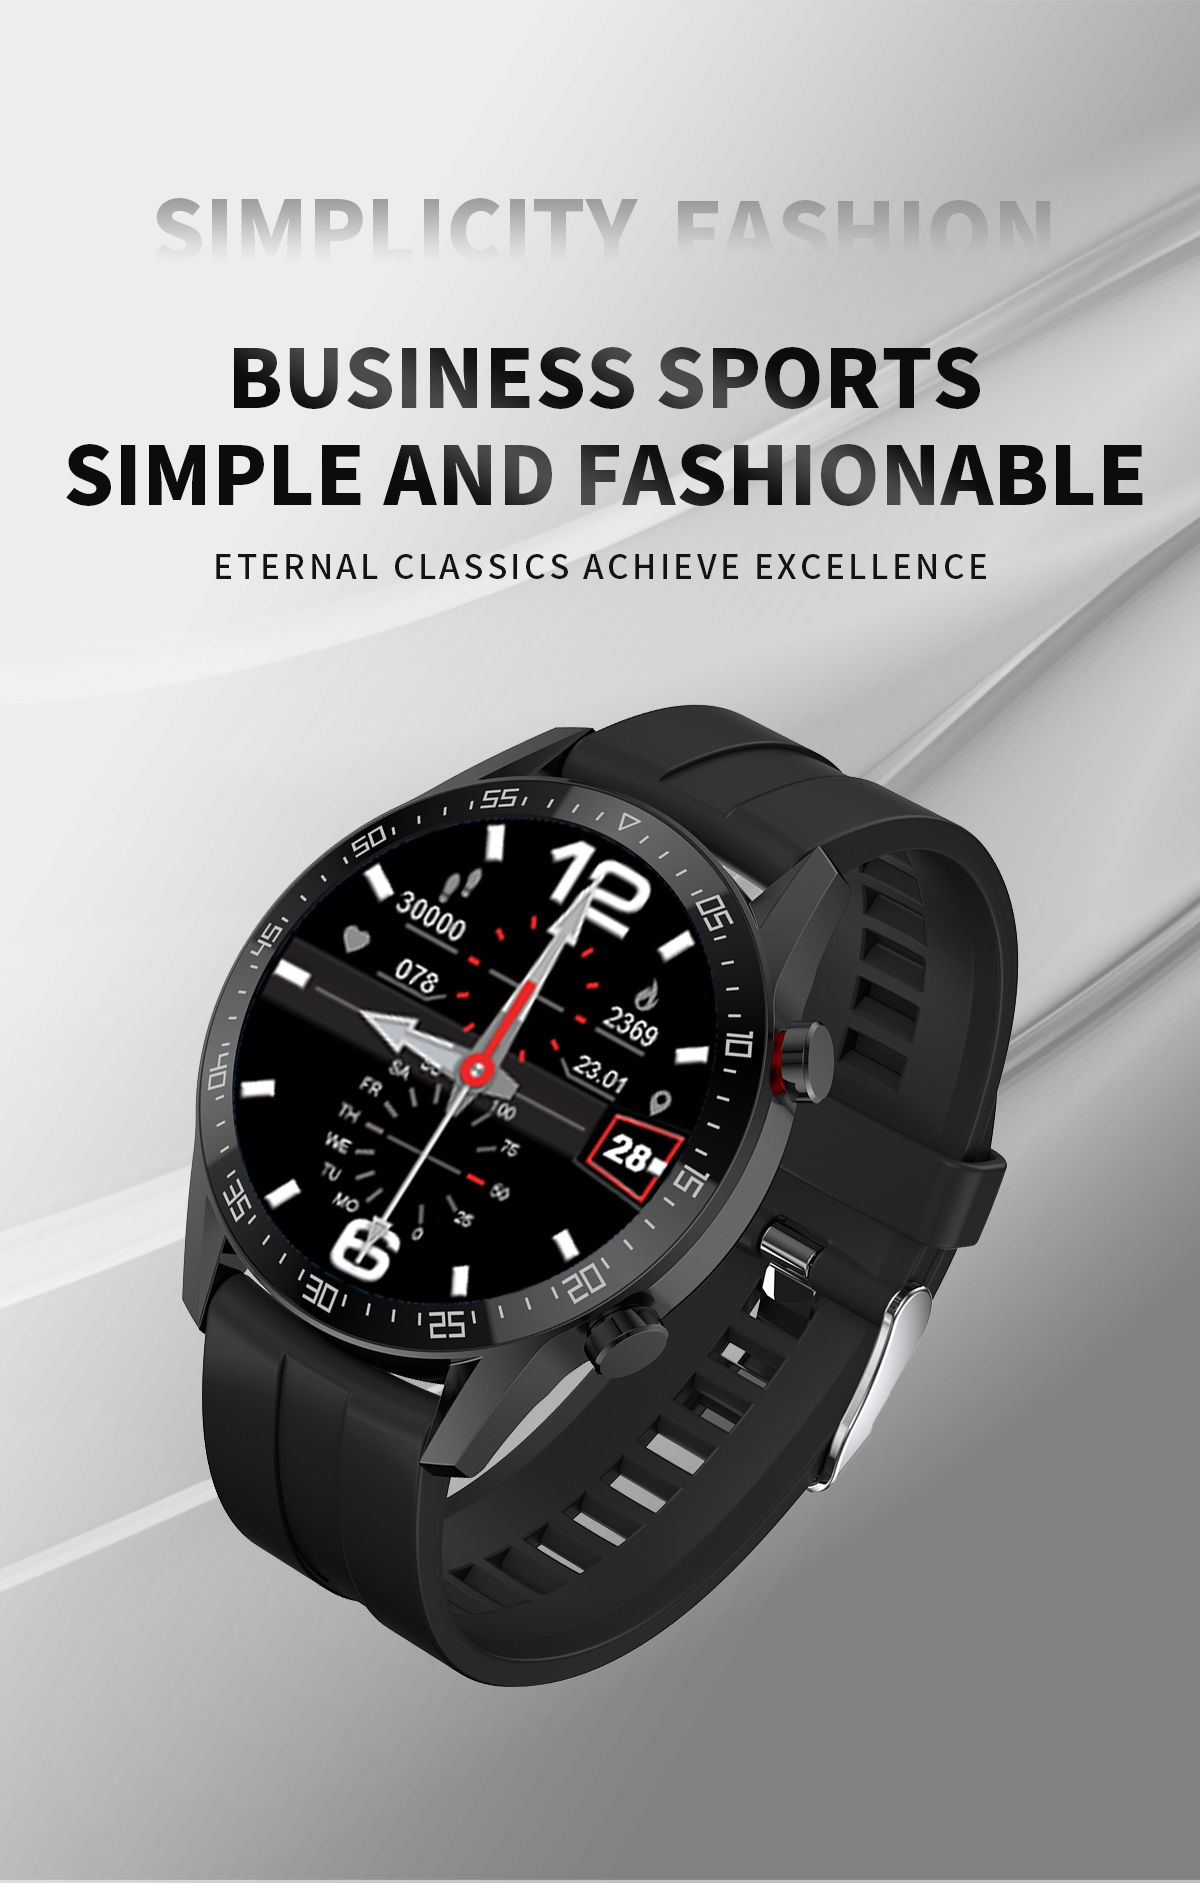 Smart watch SK7 Plus - 1.28-inch IPS - 230mAh battery-capacity - IP68 waterproof - Bluetooth 5.1 - standby up to three days - black steel strap - Amman Jordan - Pccircle